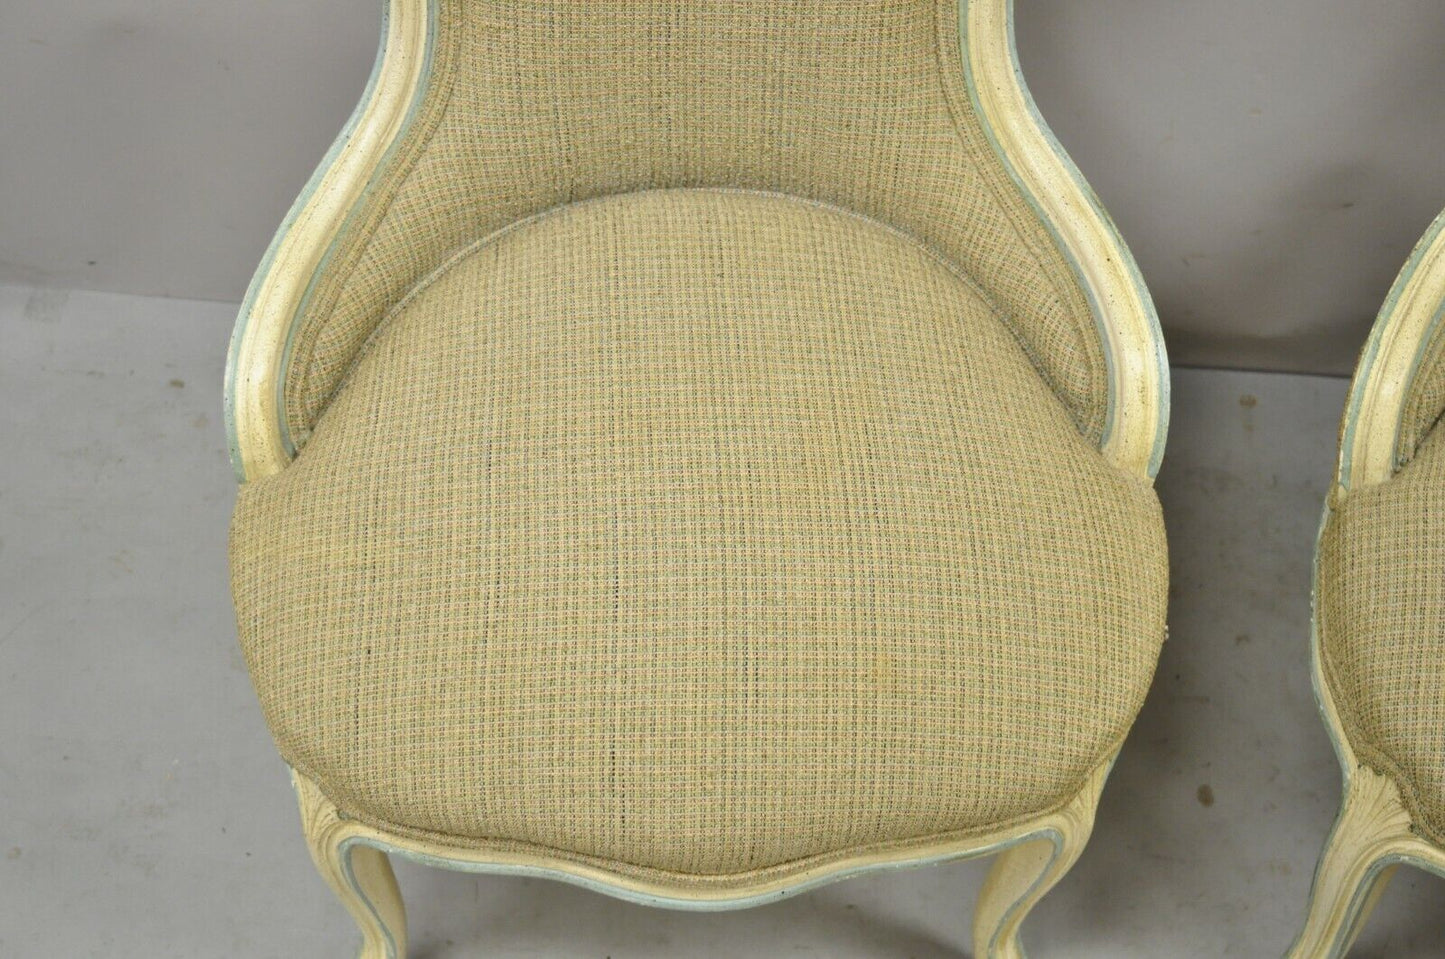 French Provincial Louis XV Cream Blue Hiprest Boudoir Slipper Chairs - a Pair